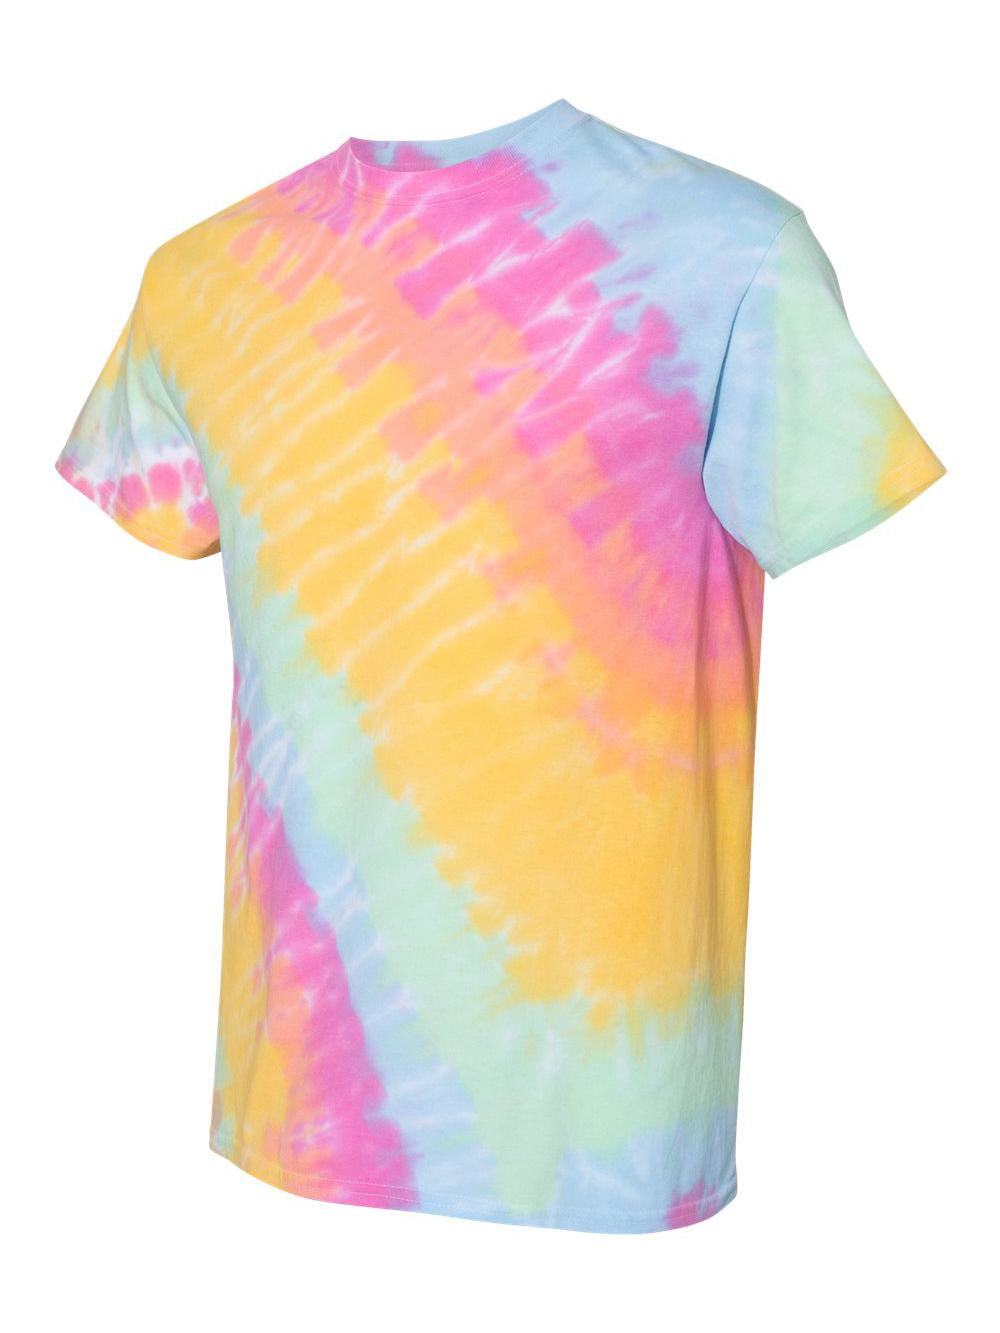 hippy shirt dyed shirt Tie Dye t-shirt rainbow shirt XL Shades or grey champion muscle shirt hippie t-shirt